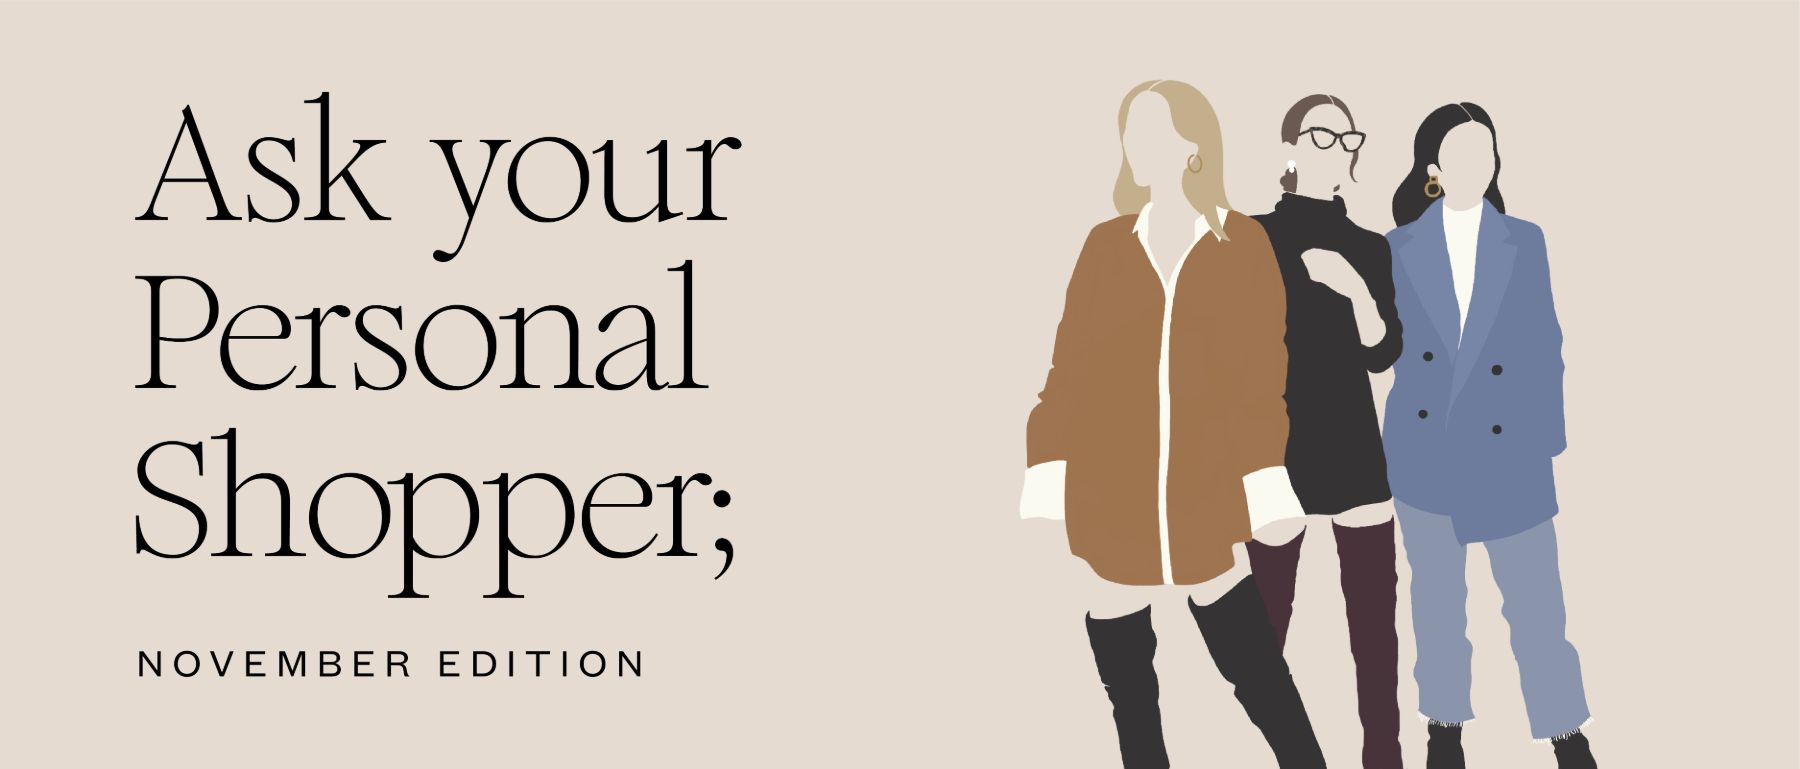 Pregunta a tu Personal shopper noviembre 2020